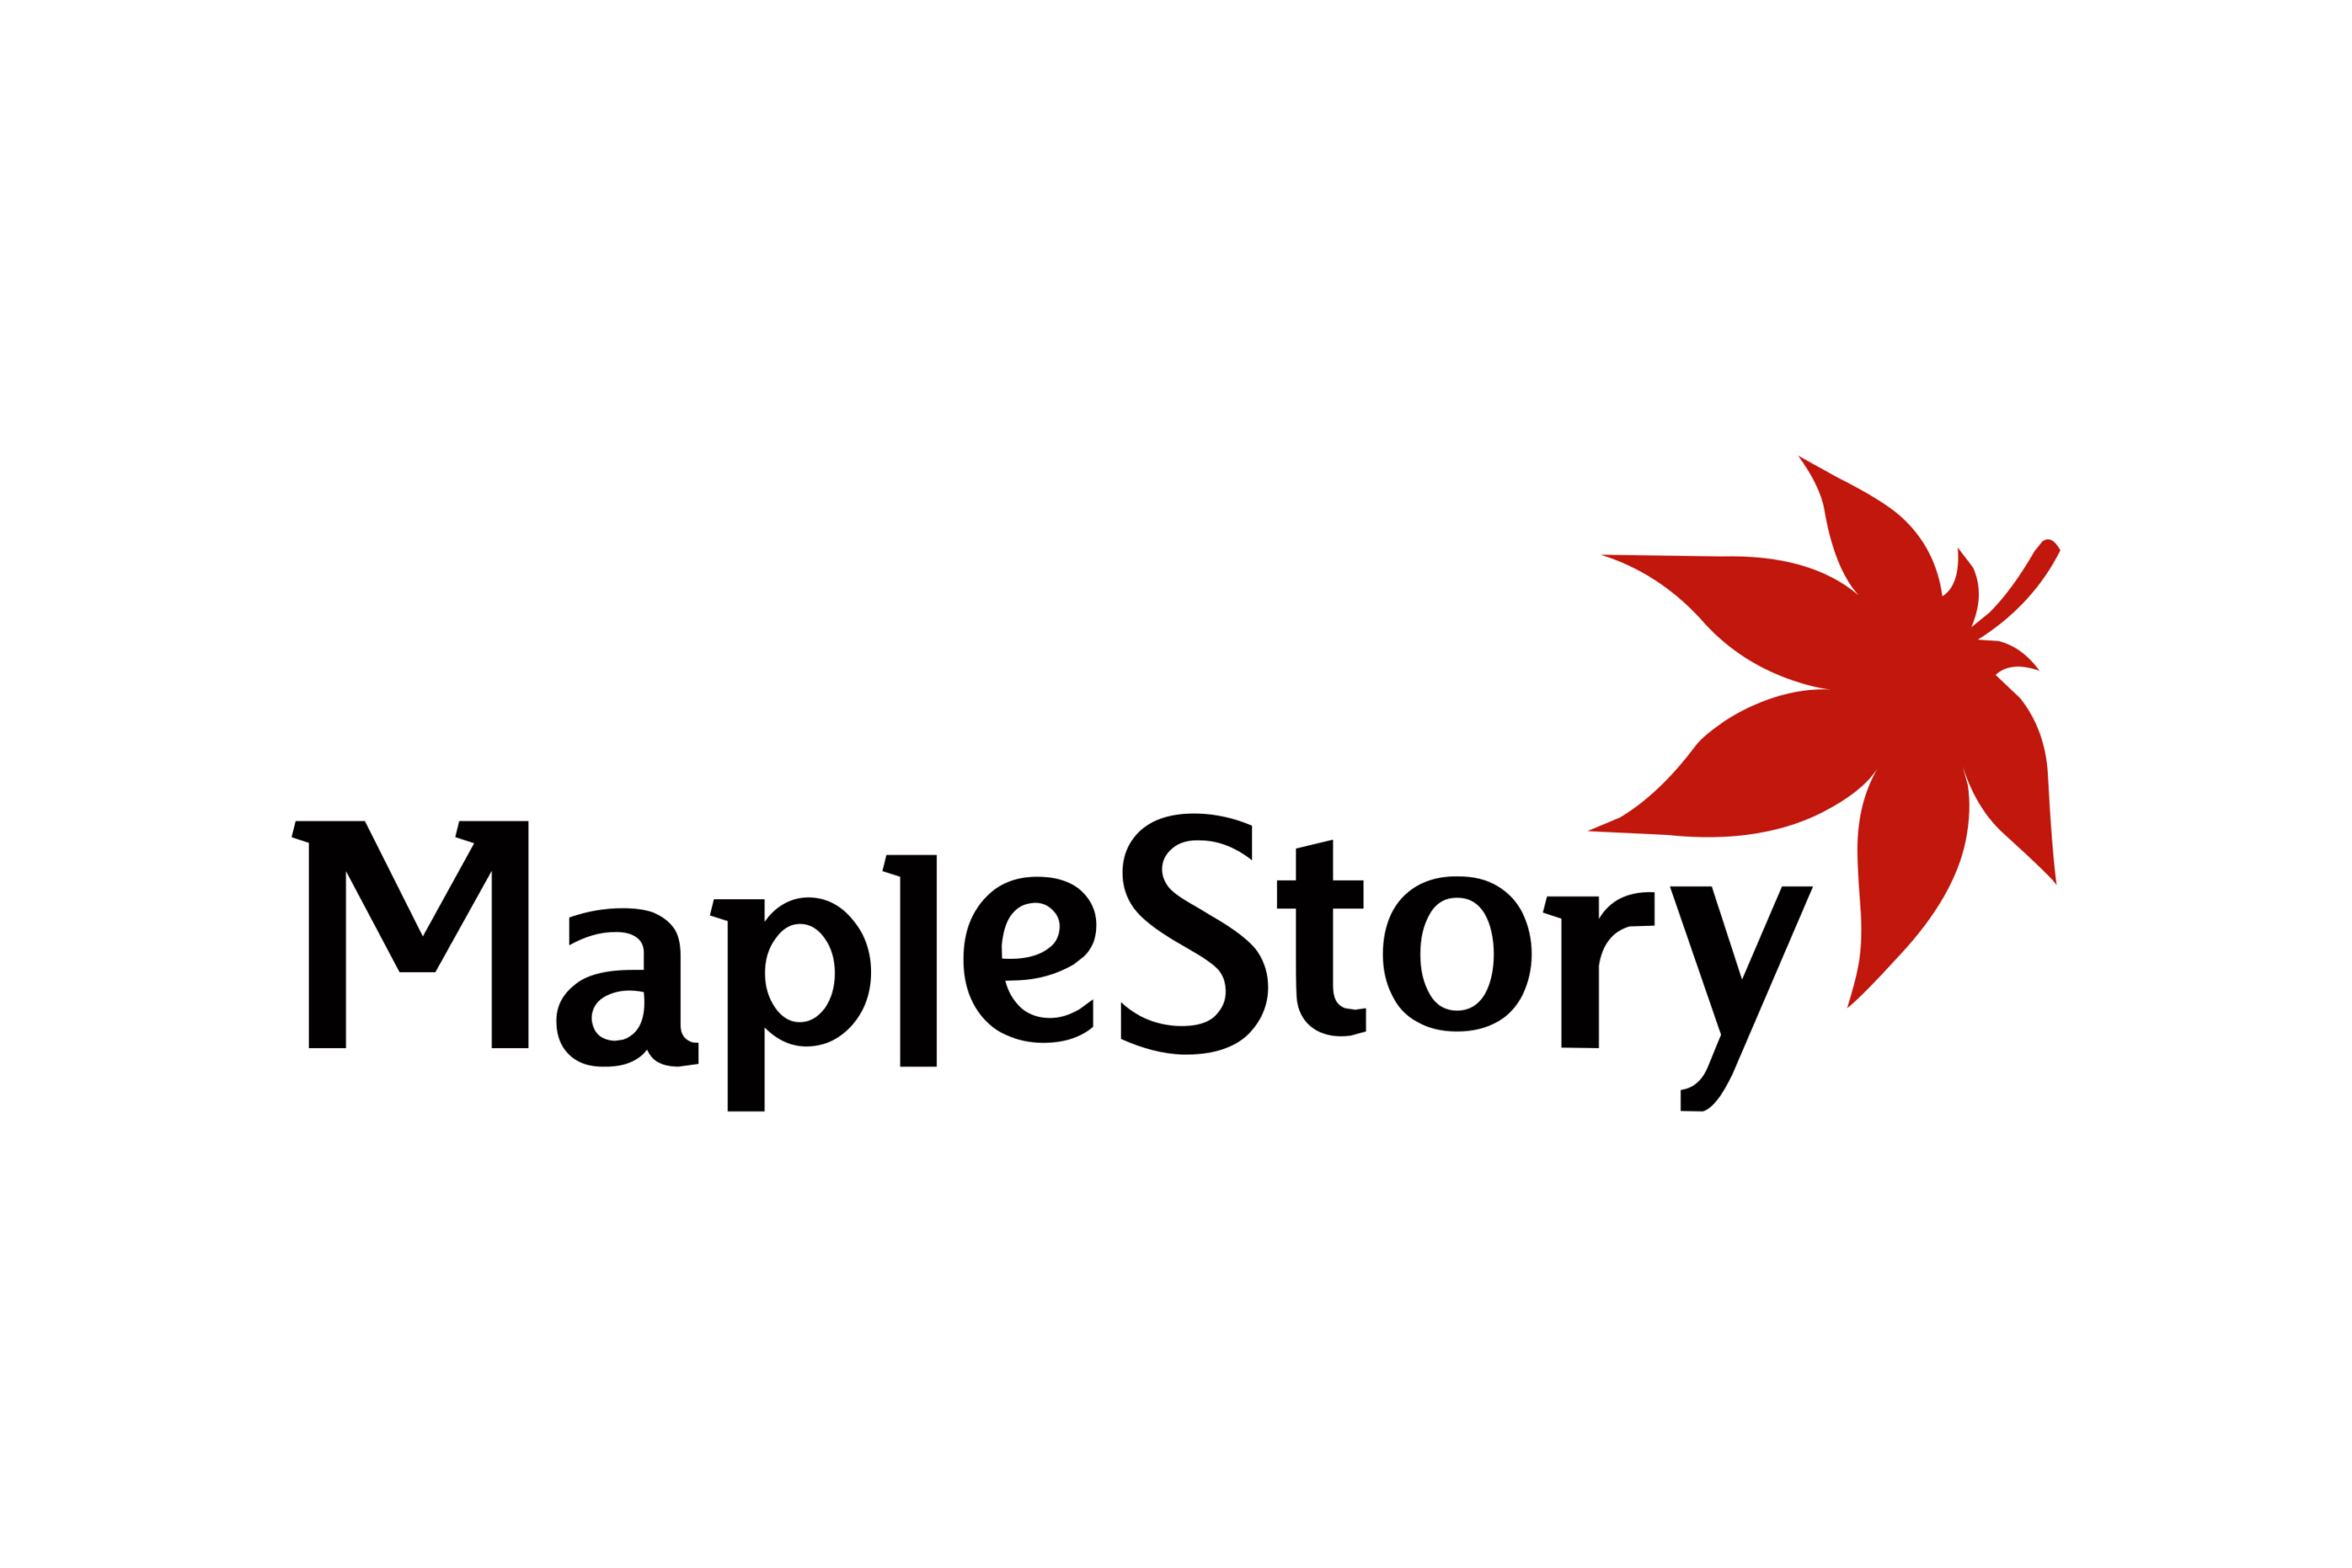 Логотип MapleStory